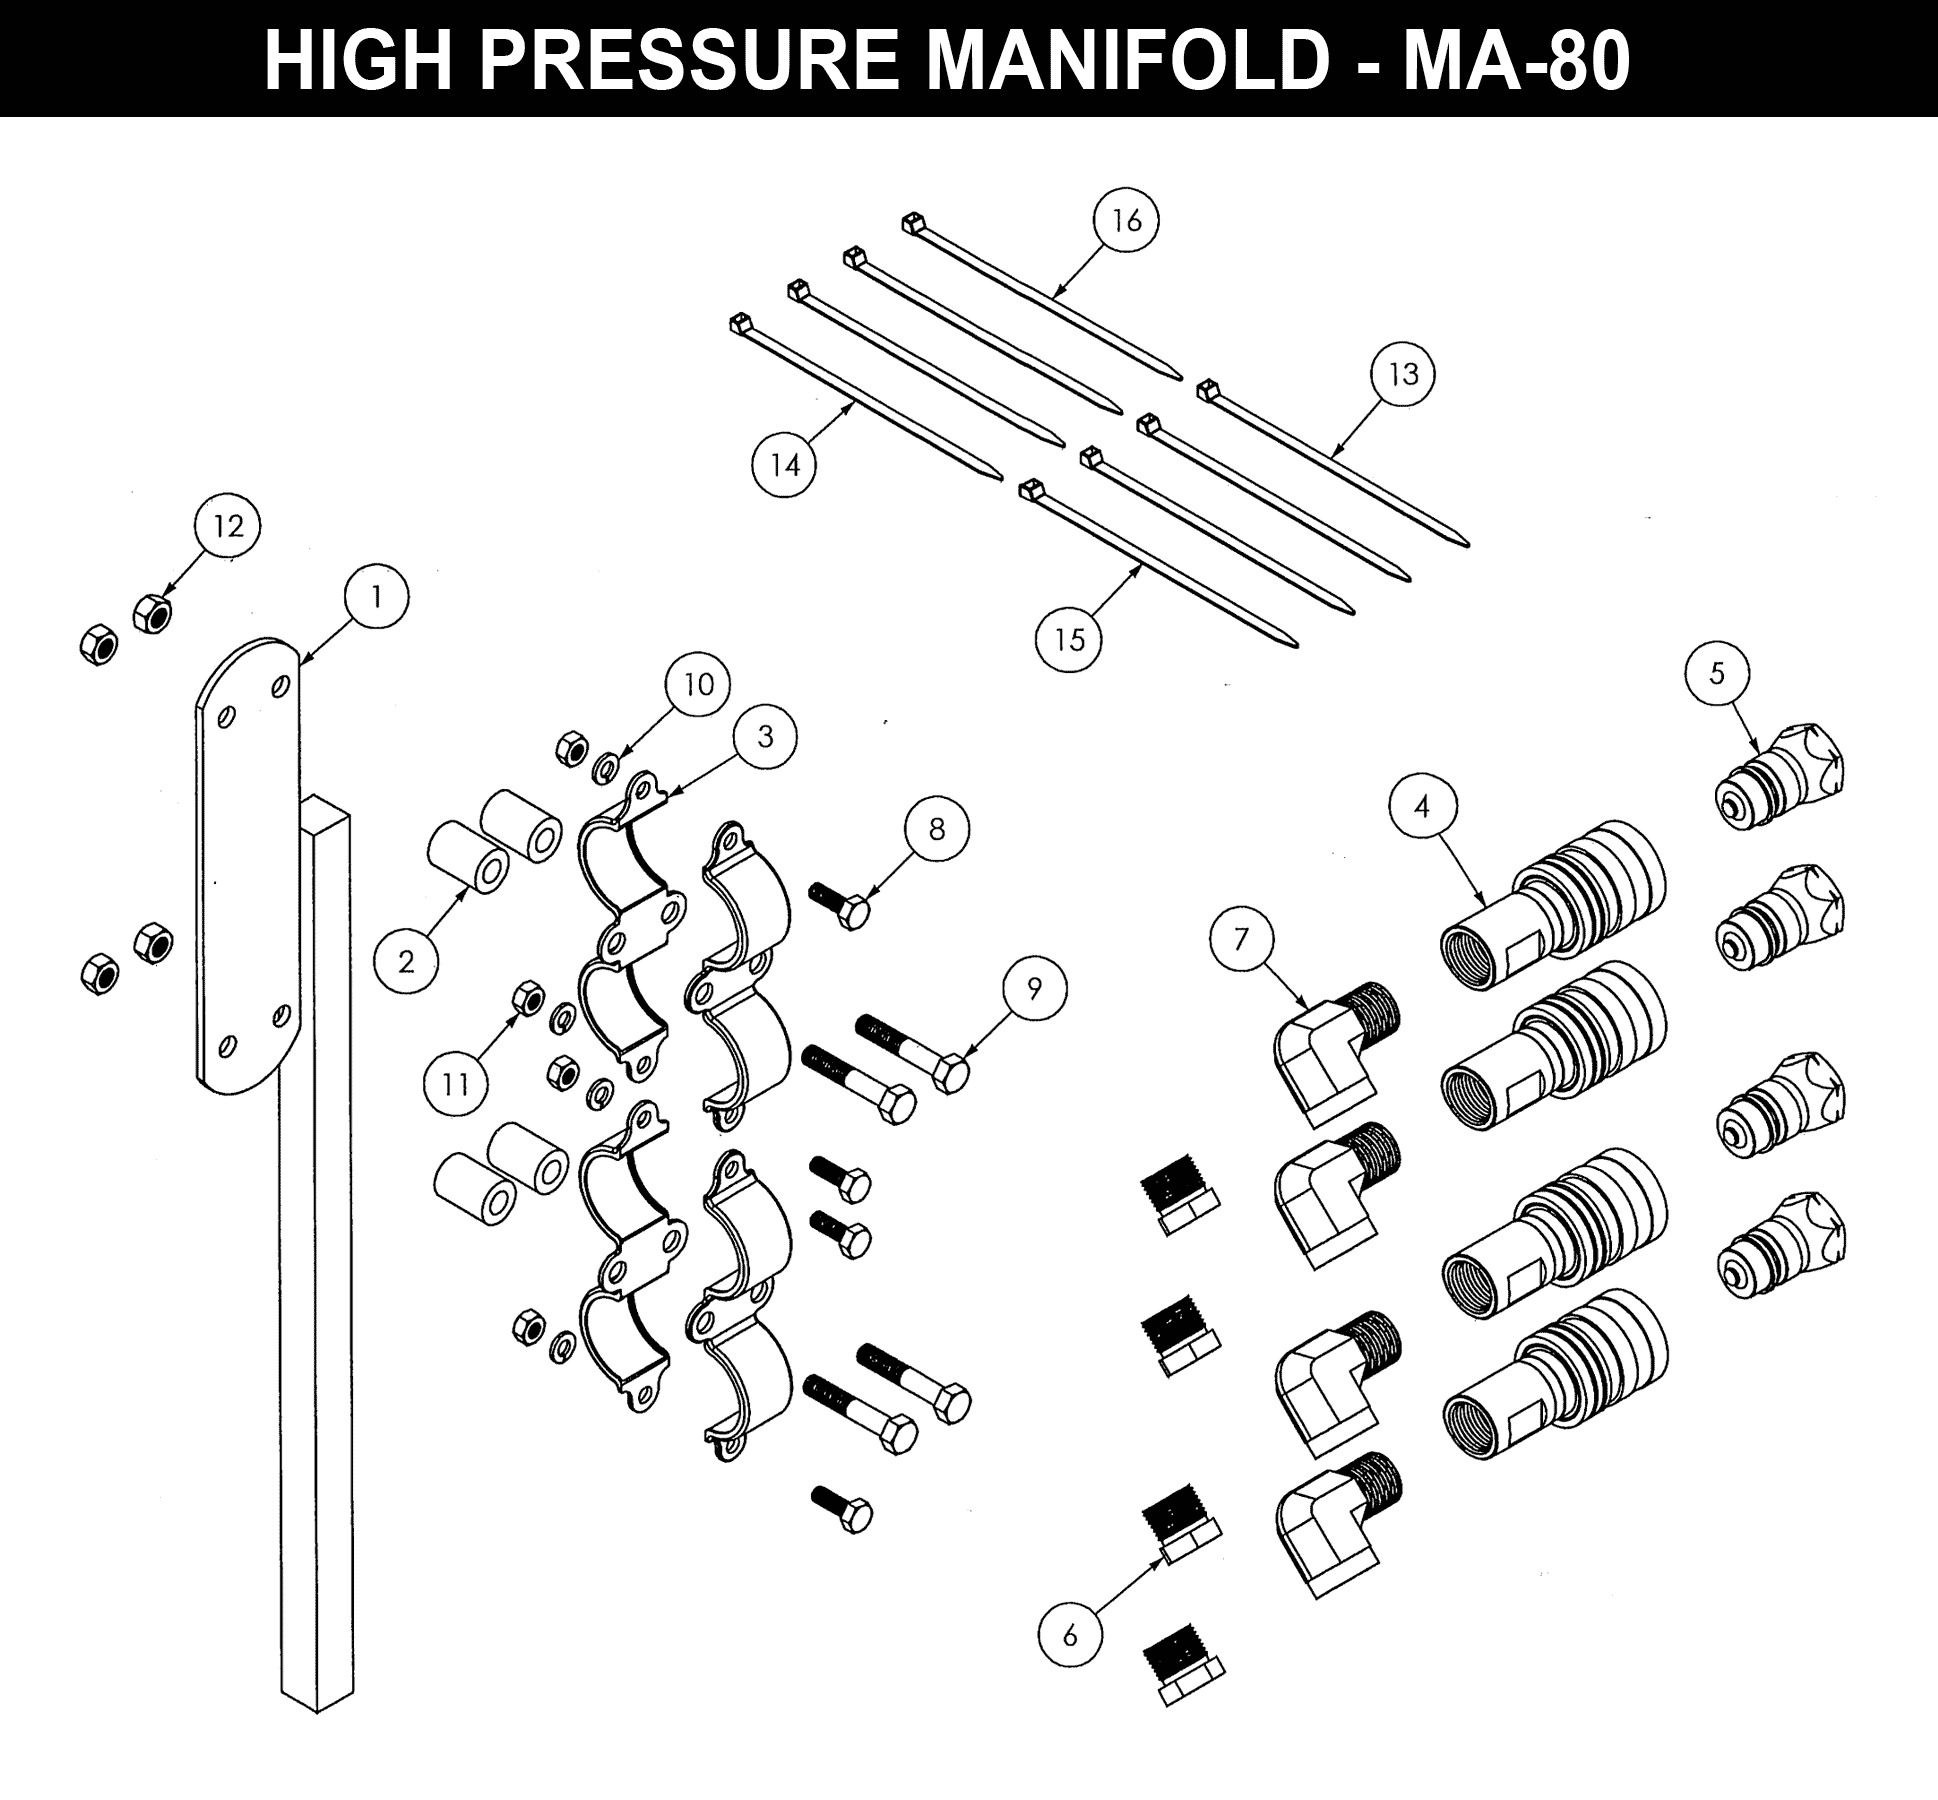 Standard Manifold - MA-80